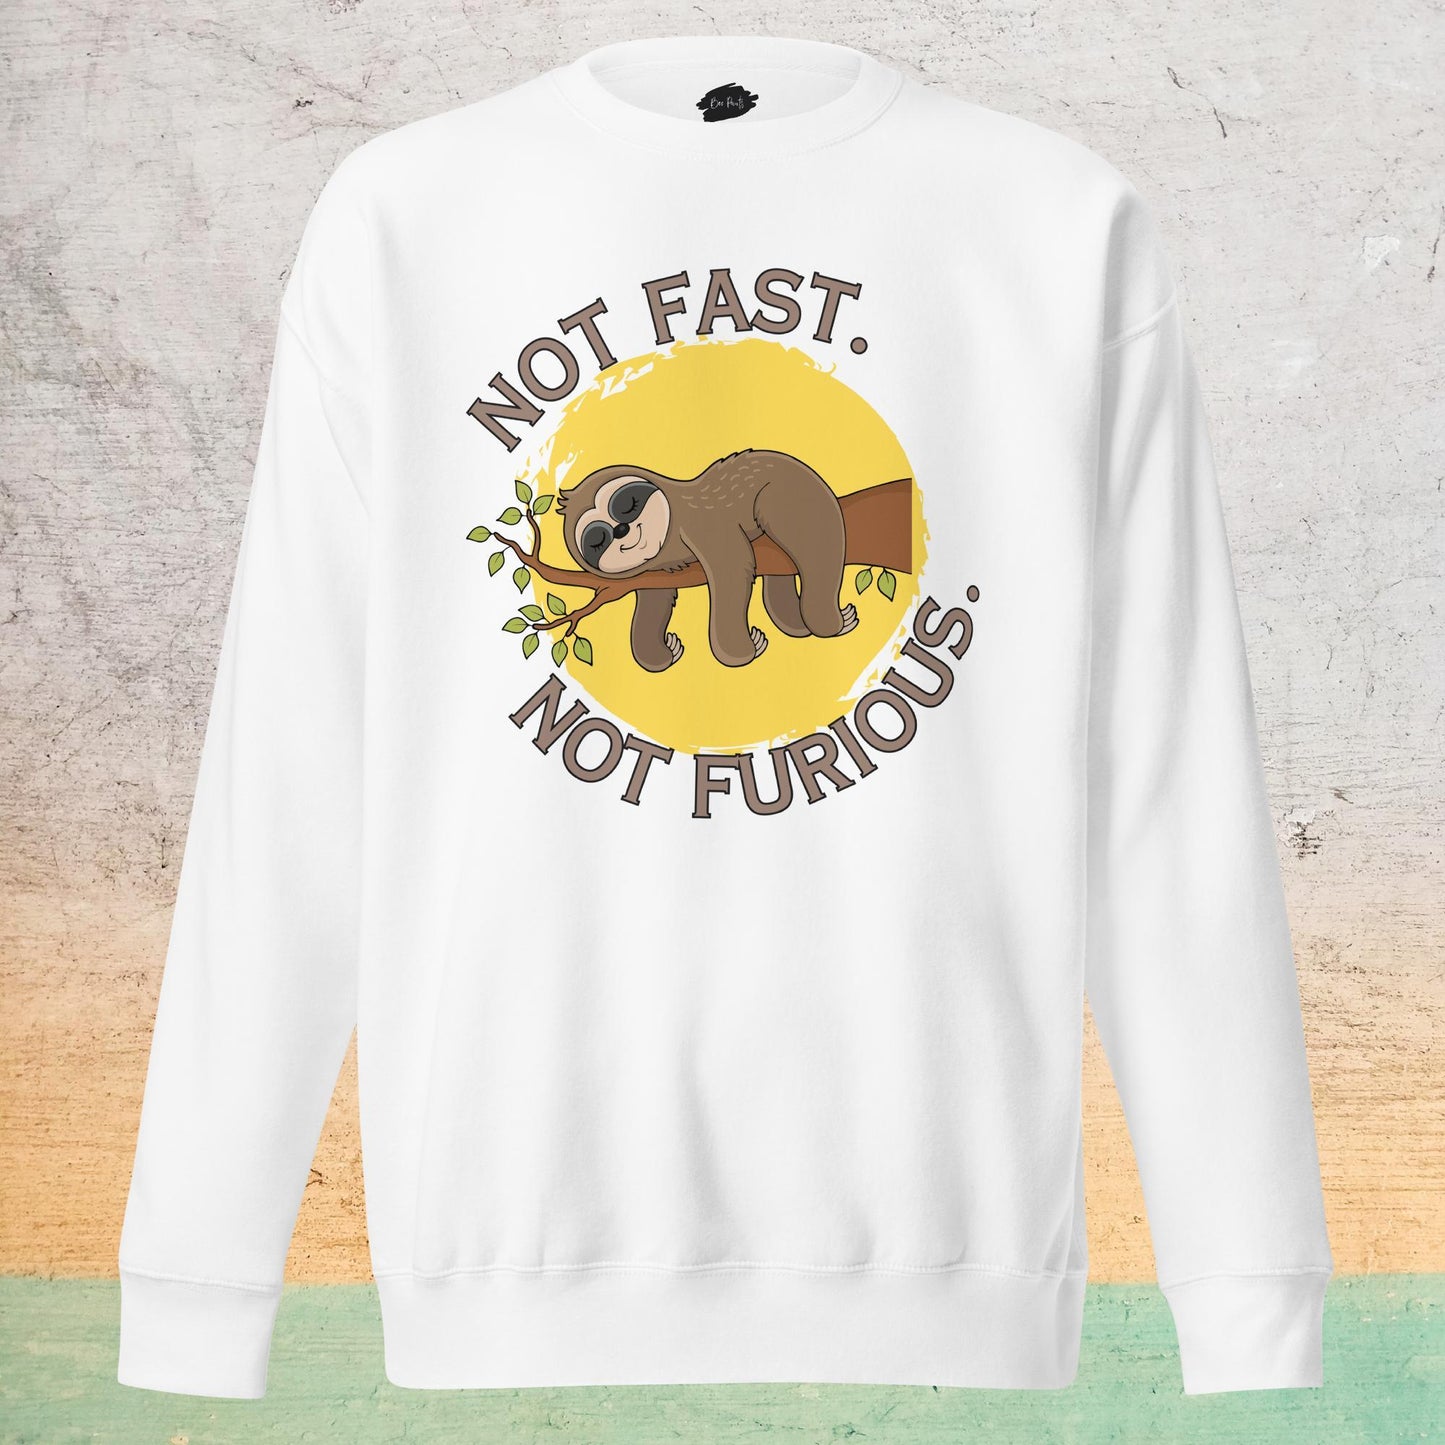 Premium Crew Neck Sweatshirt - Not Fast Not Furious